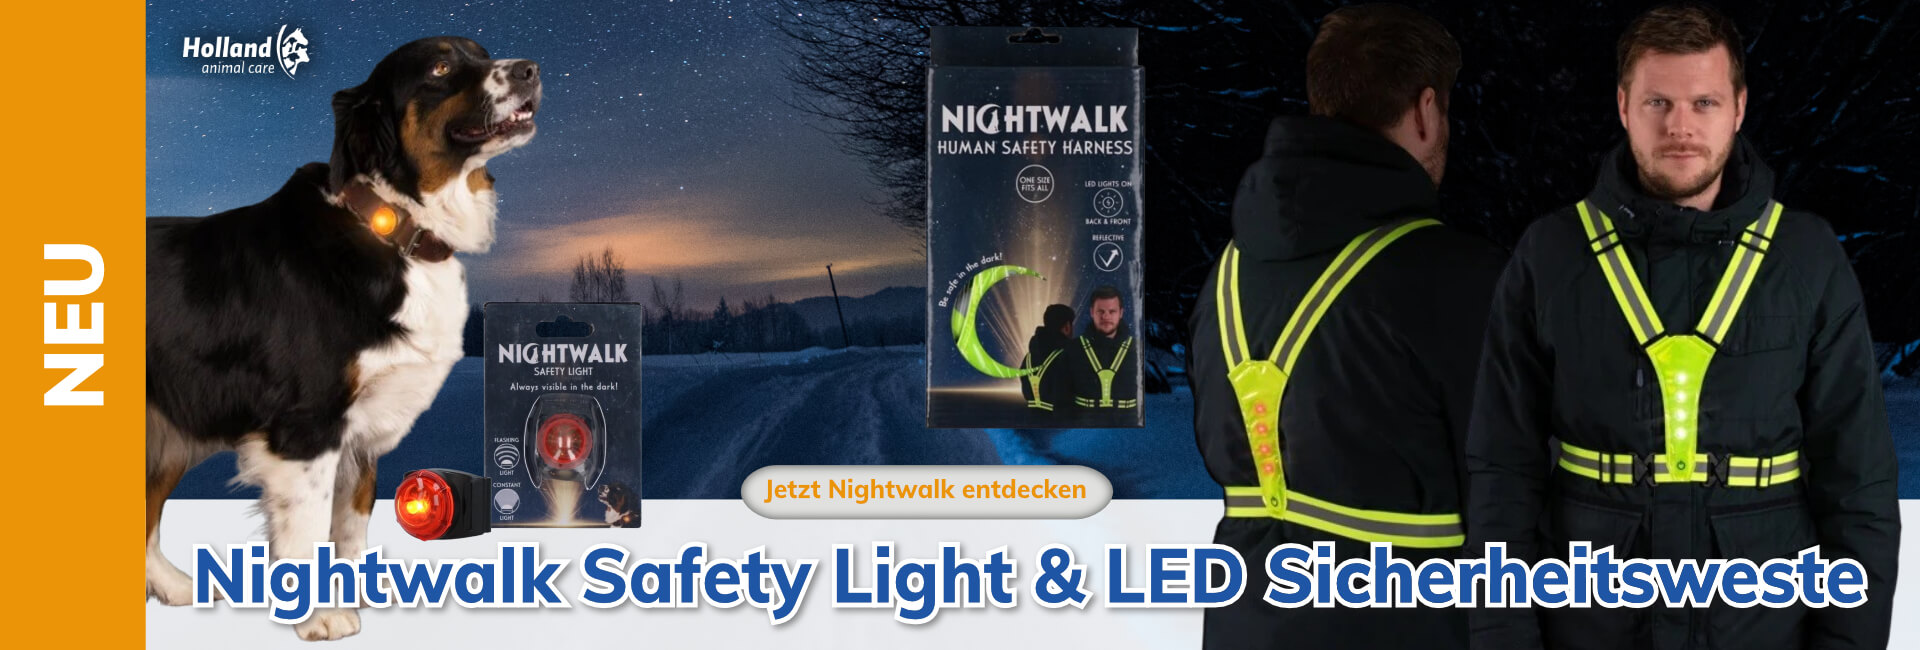 Holland Animal Care Nightwalk Safety Light & LED Sicherheitsweste